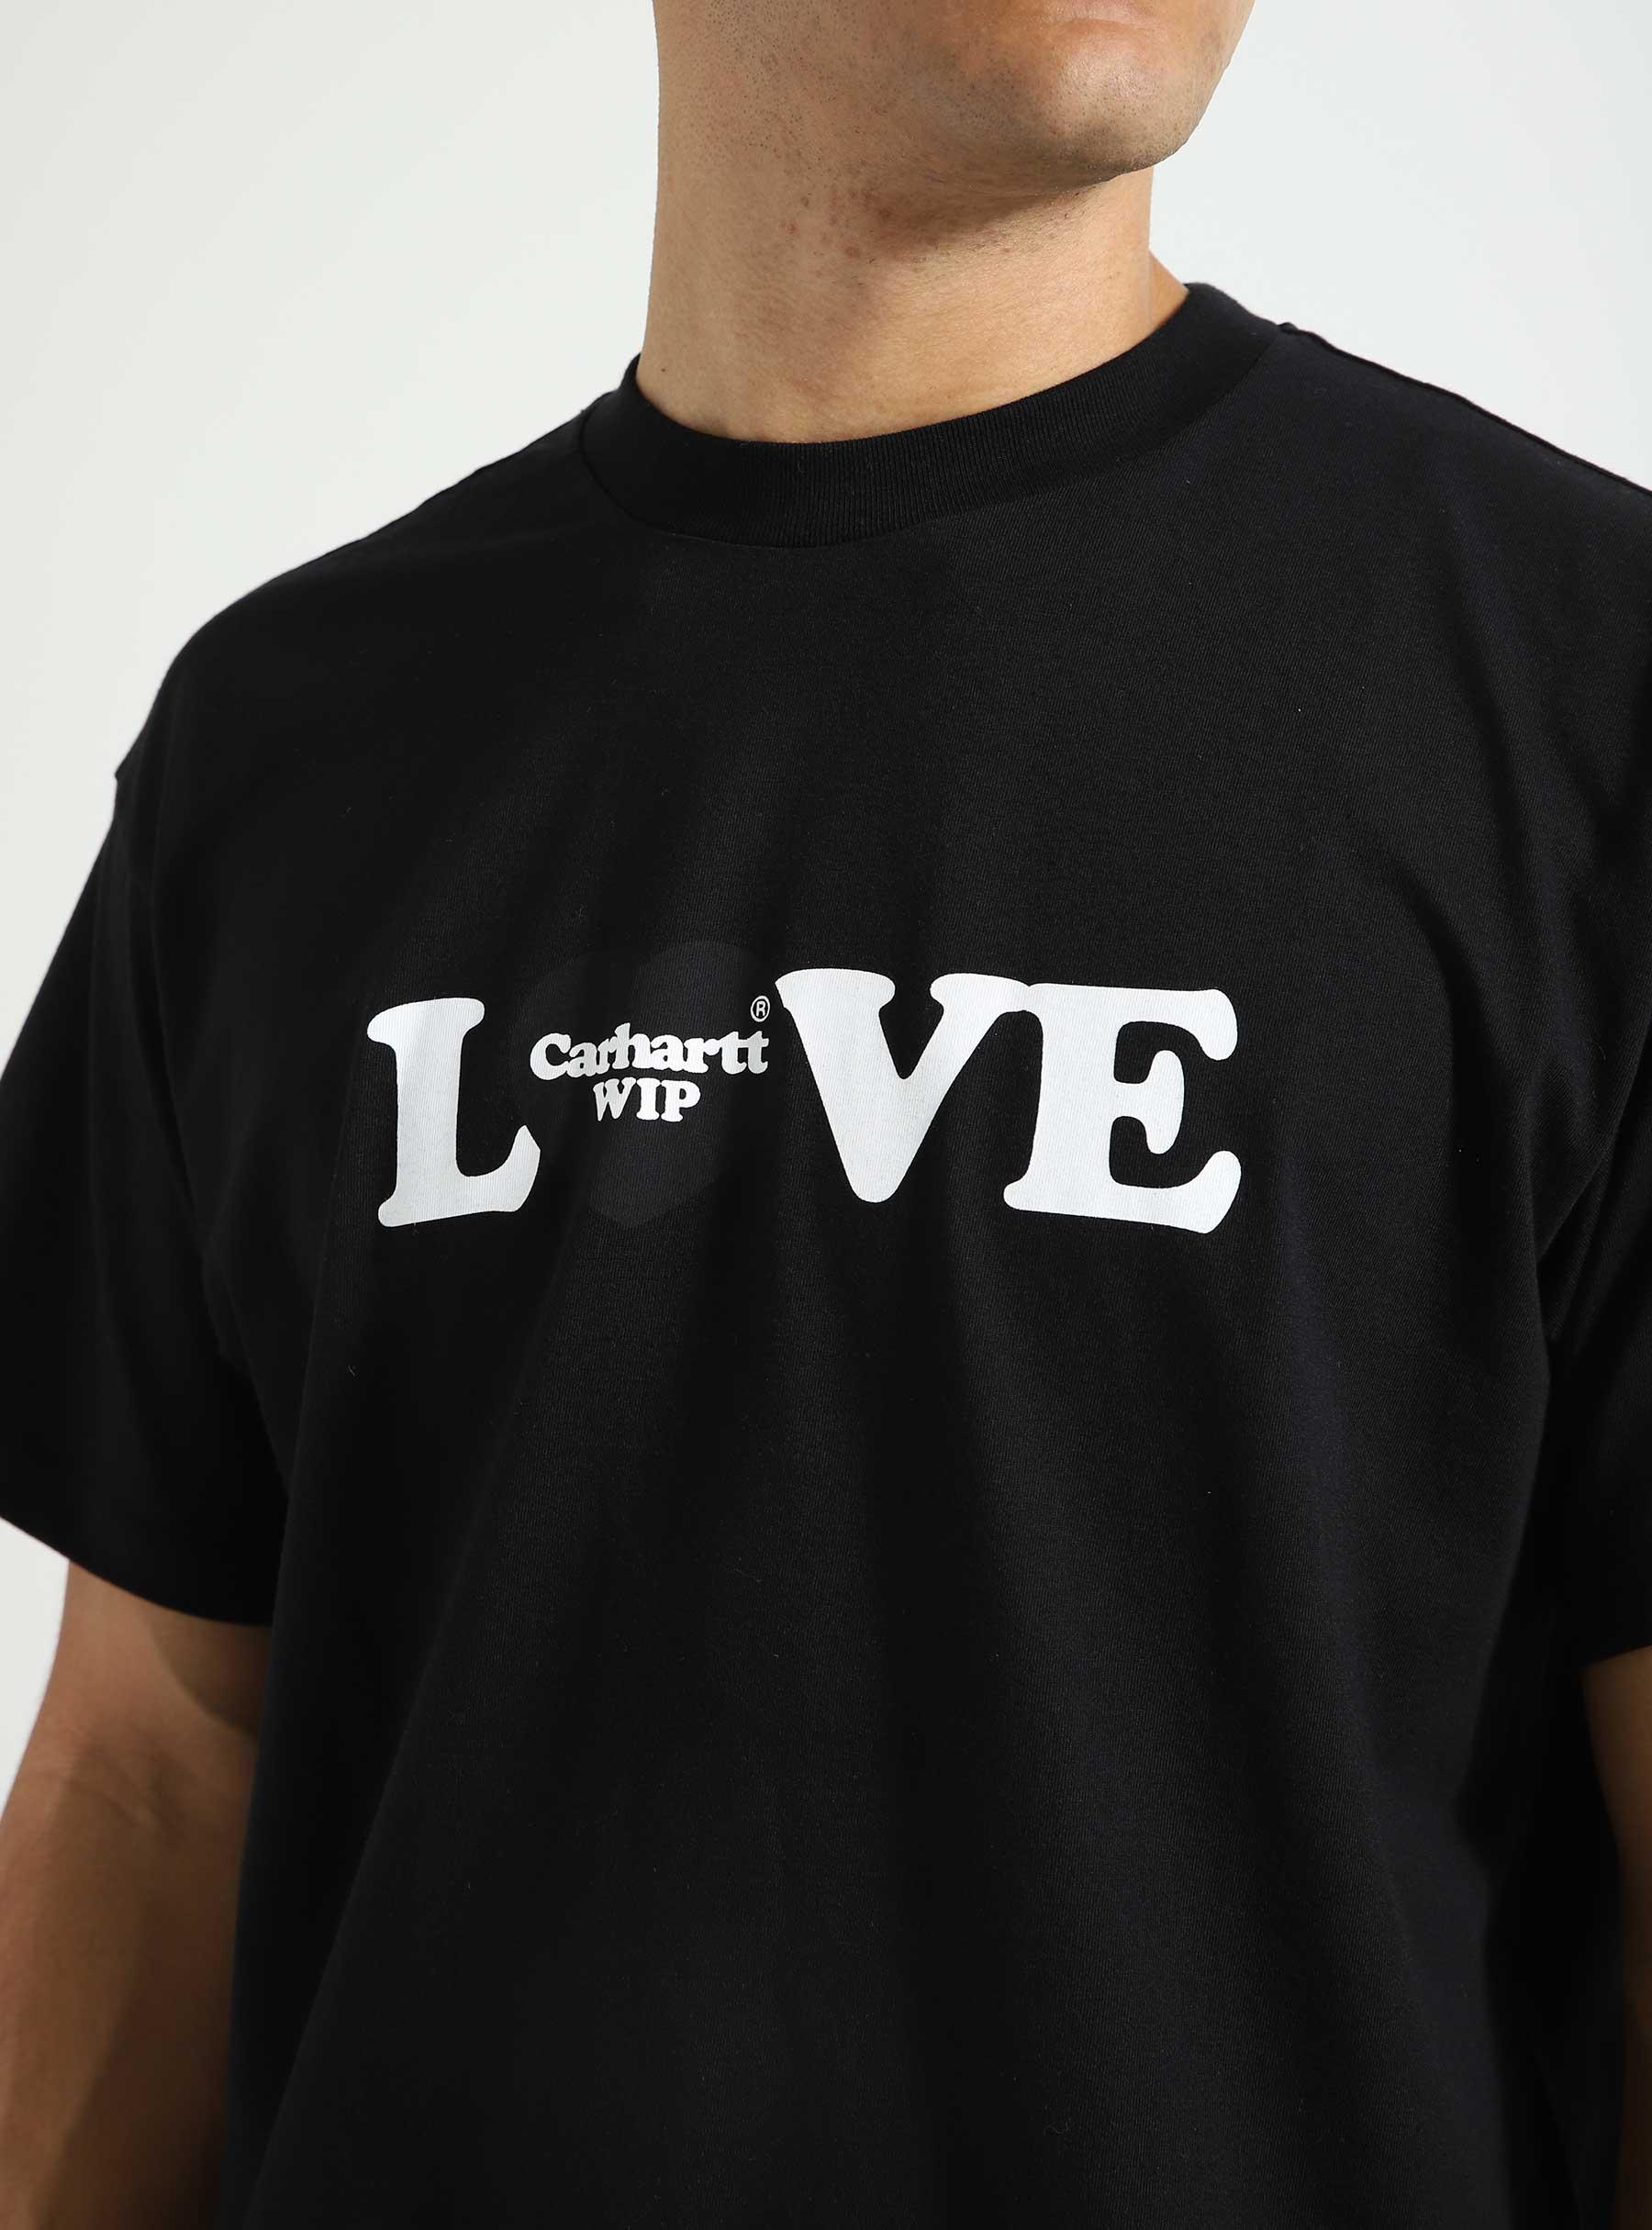 Love T-Shirt Black I032179-89XX